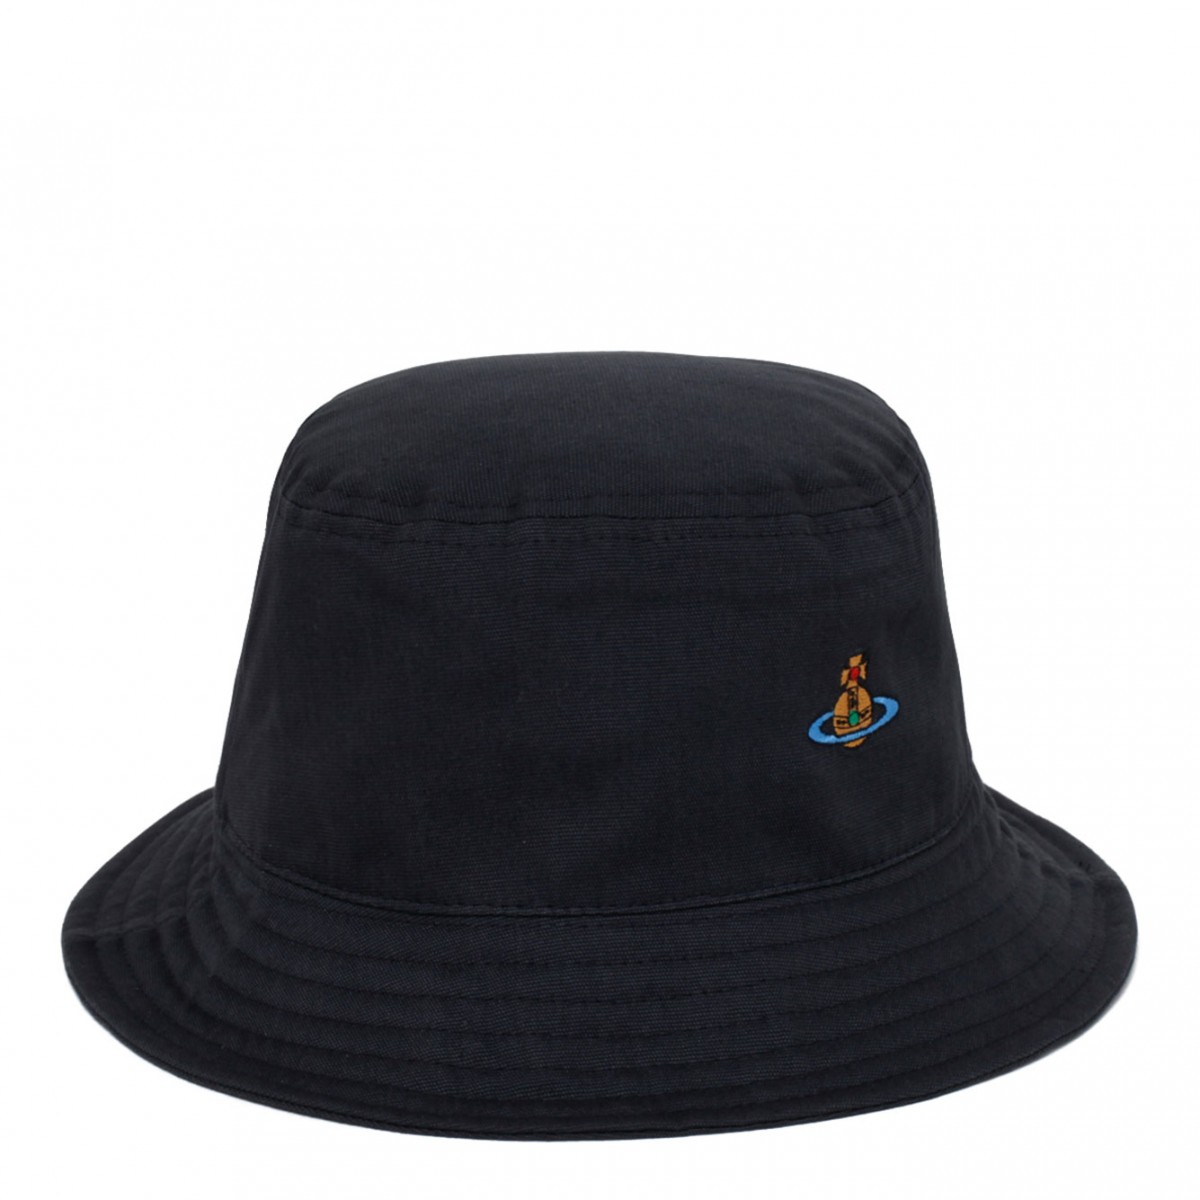 Unisex Colour Navy Blue Bucket Hat